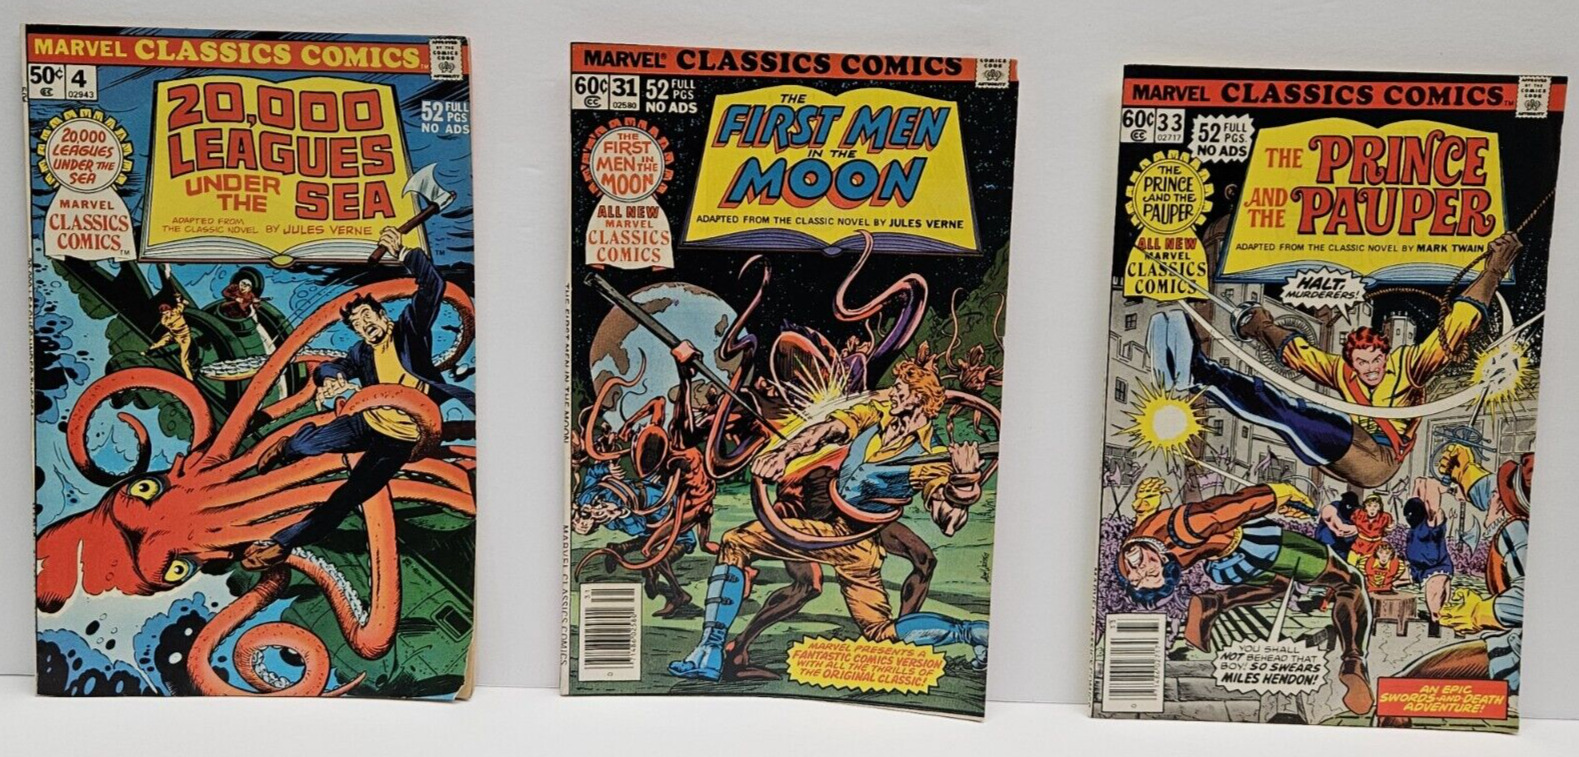 Marvel Classics Comics 20,000 Leagues Under The Sea First Men In Moon Lot Of 3